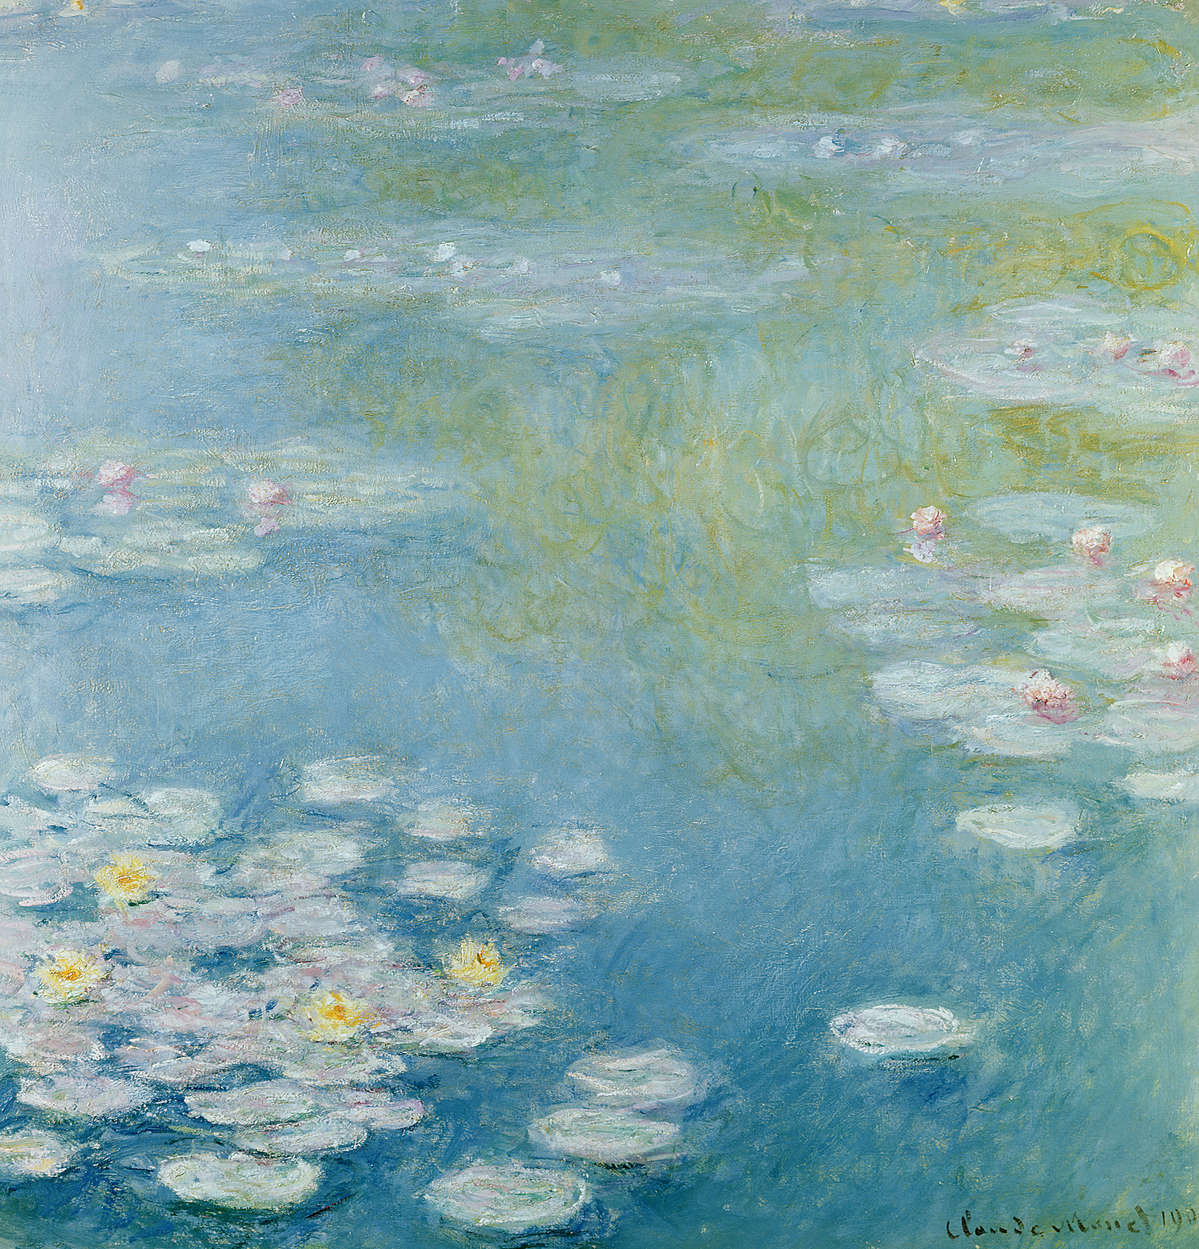             Mural "Ninfas en Giverny" de Claude Monet
        